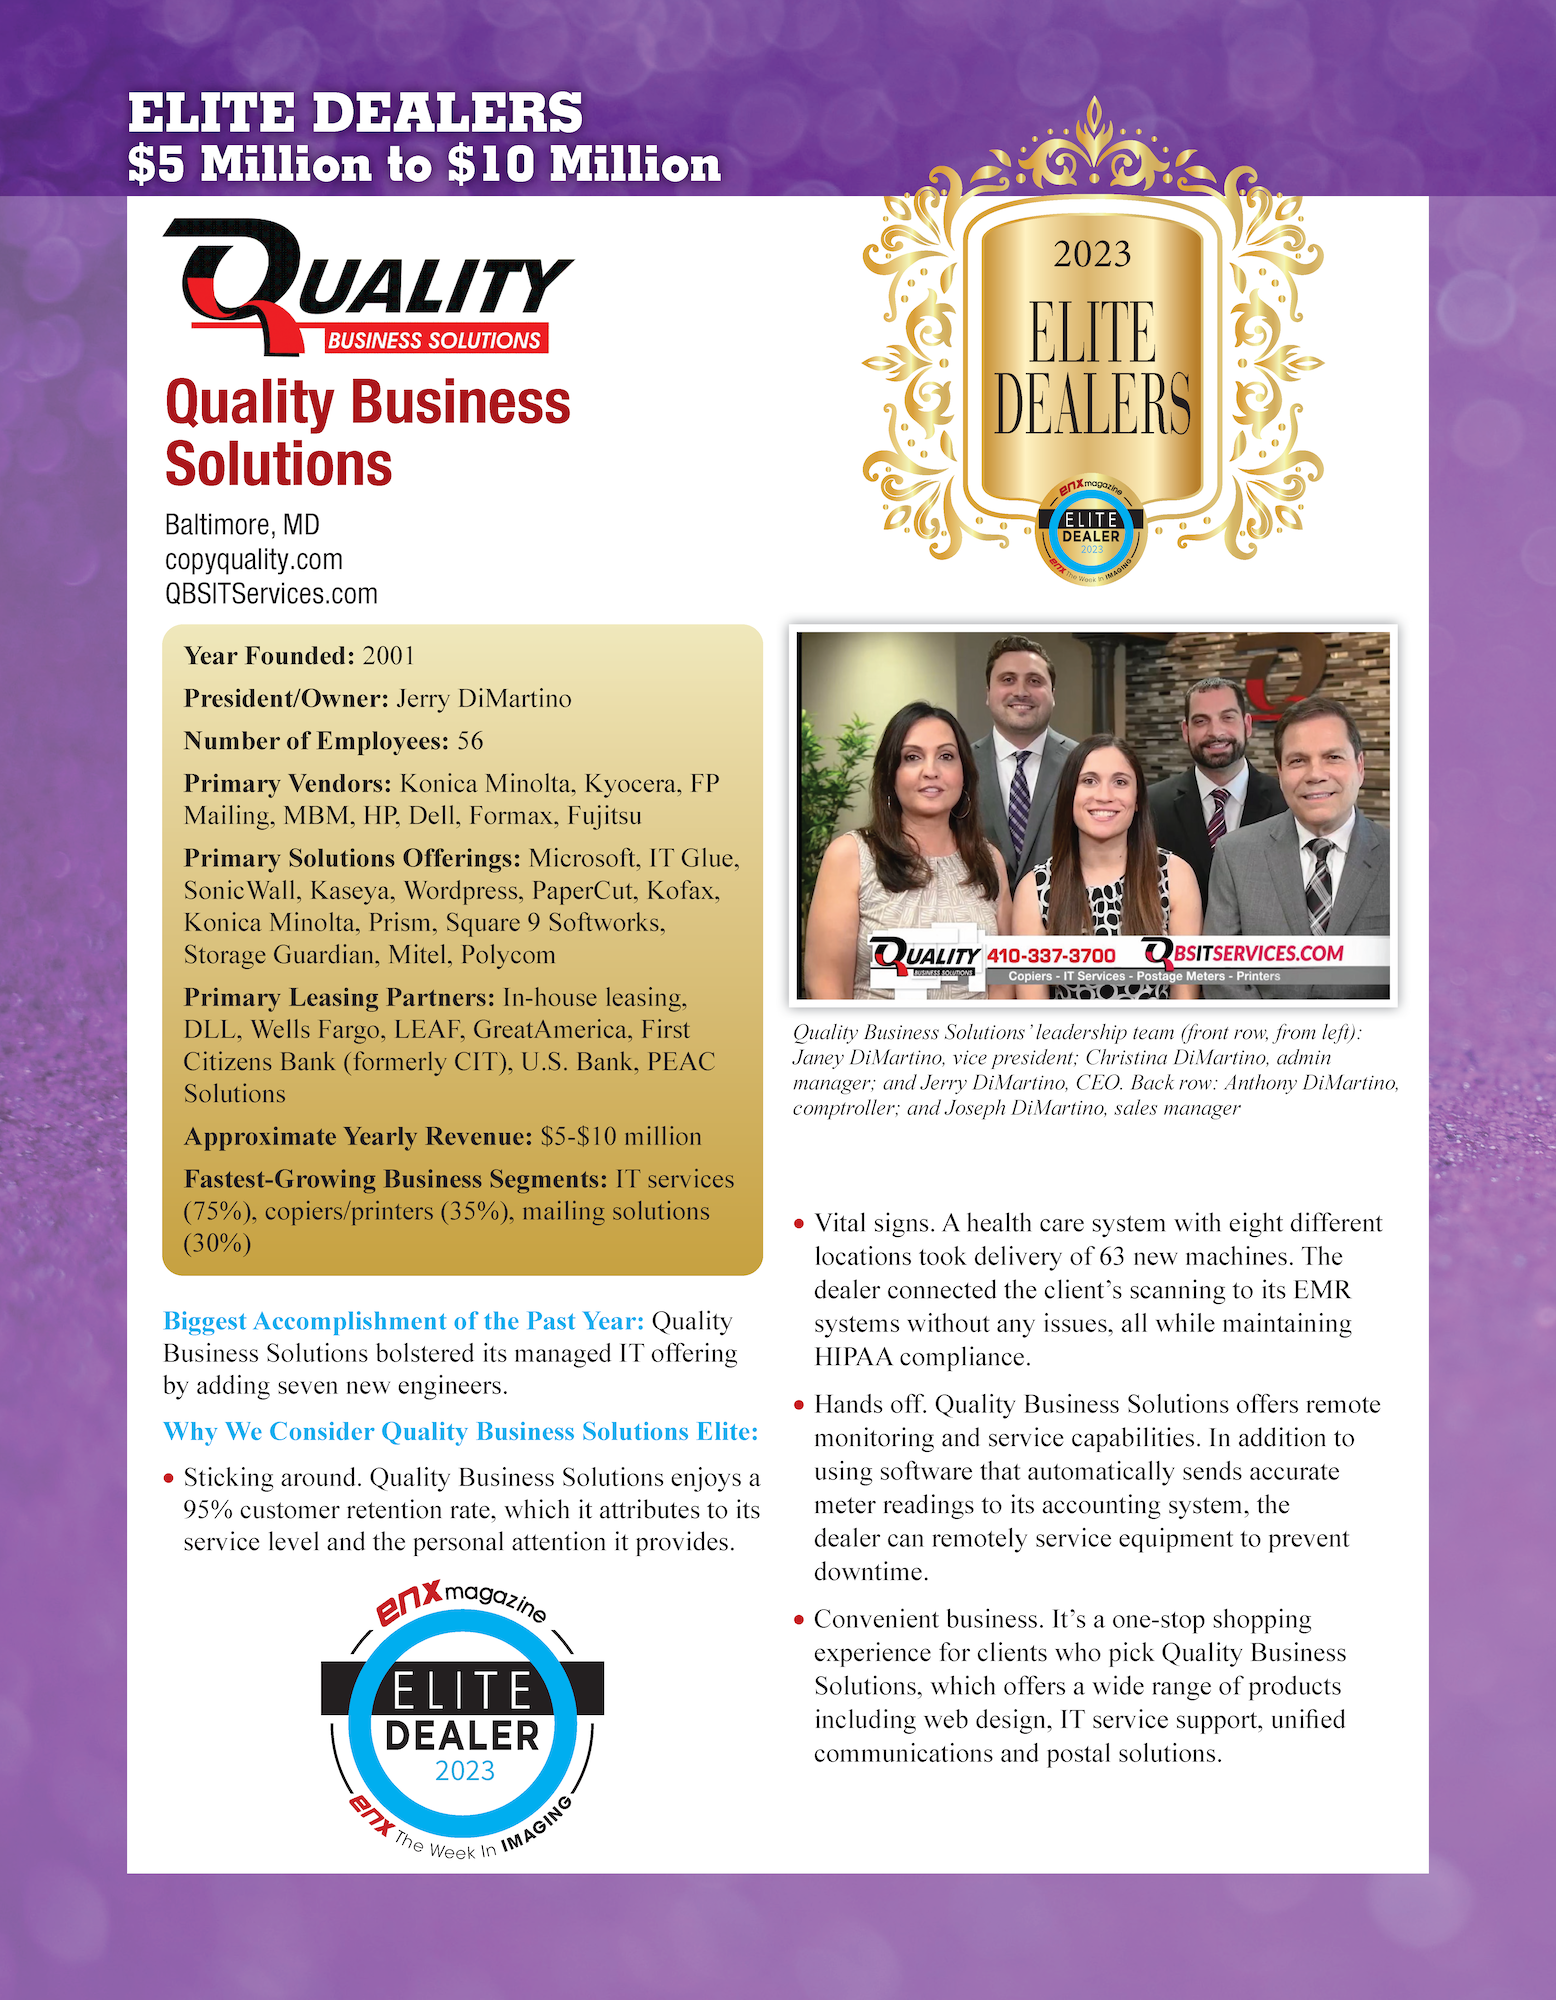 Quality-Business-Solutions-Elite-Dealer-2023